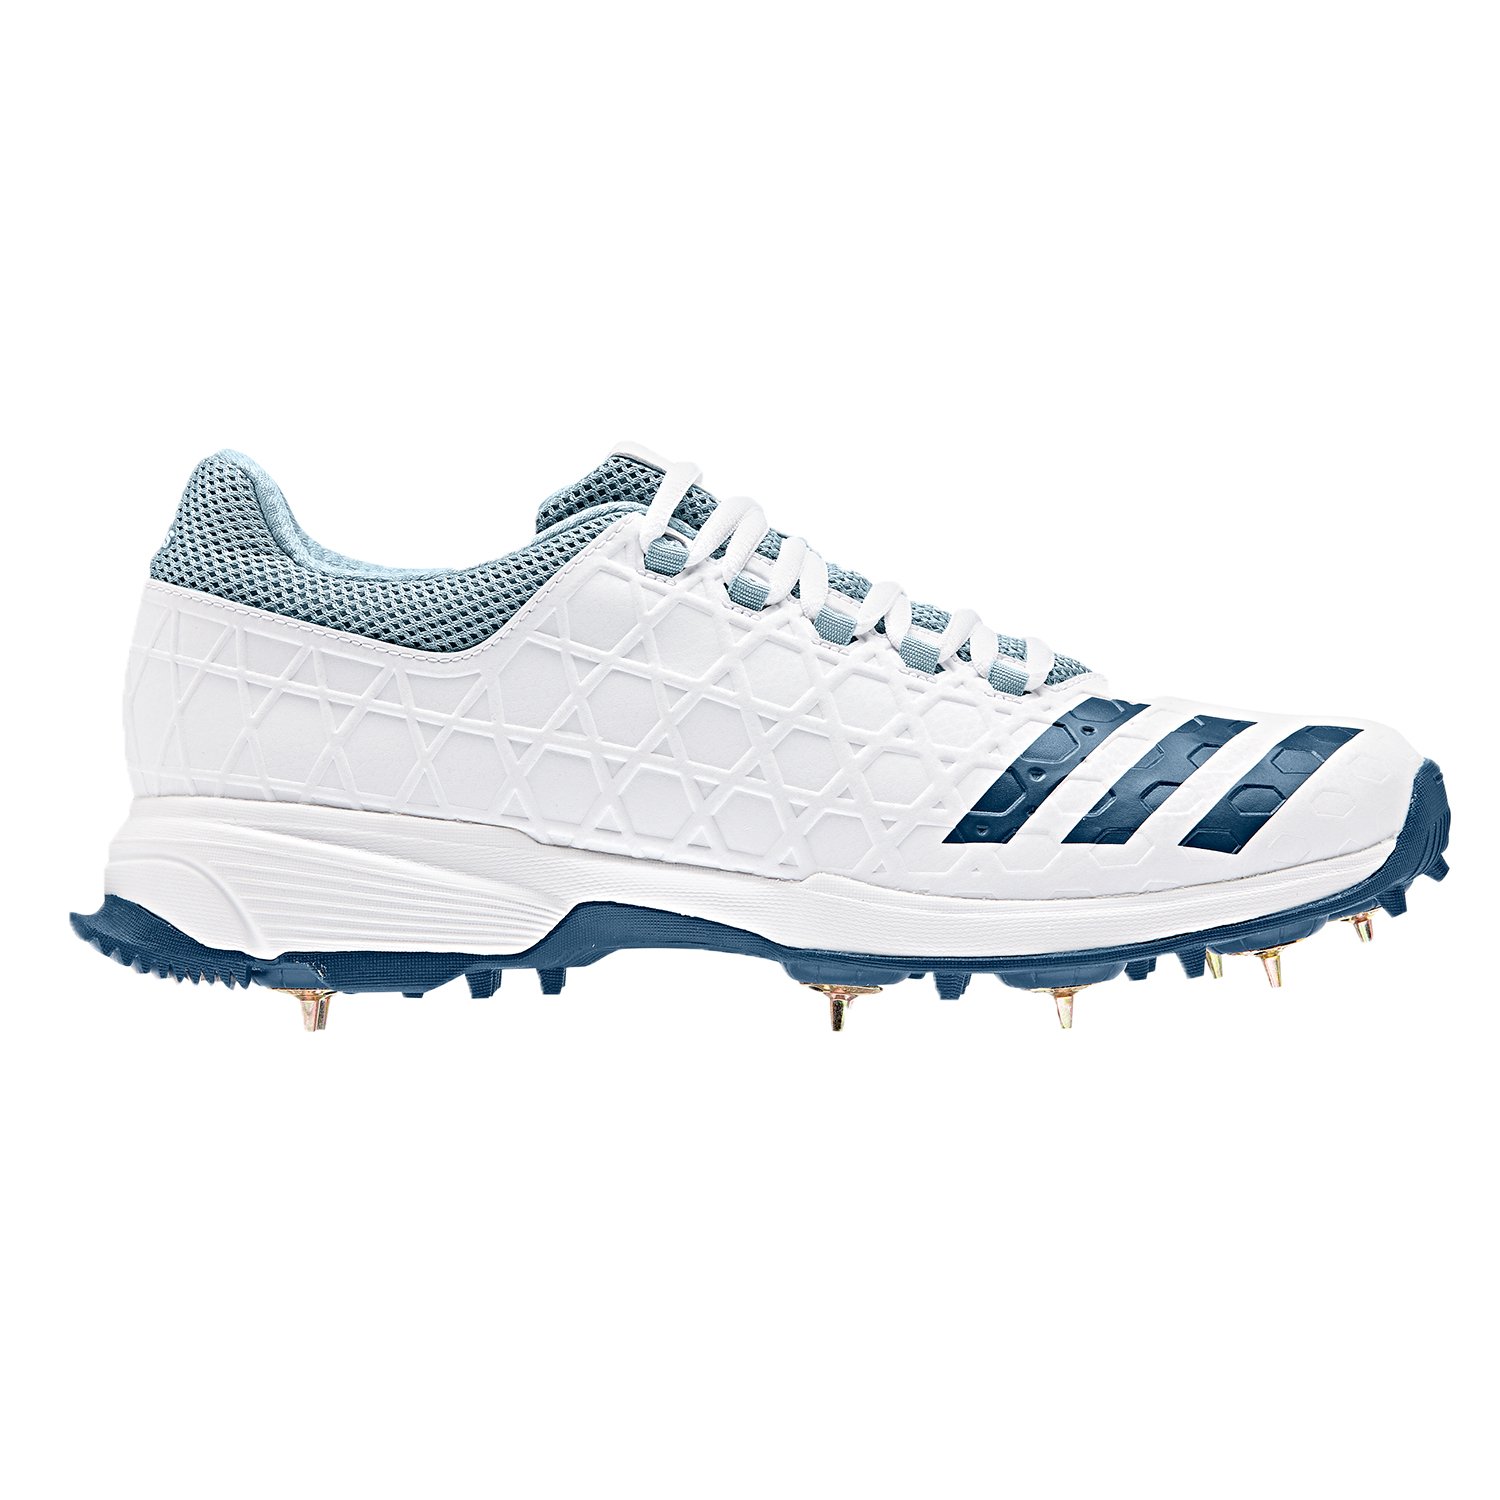 AdiZero SL22 Cricket Shoe (19/20) - Shoes Cricket Express - Adidas